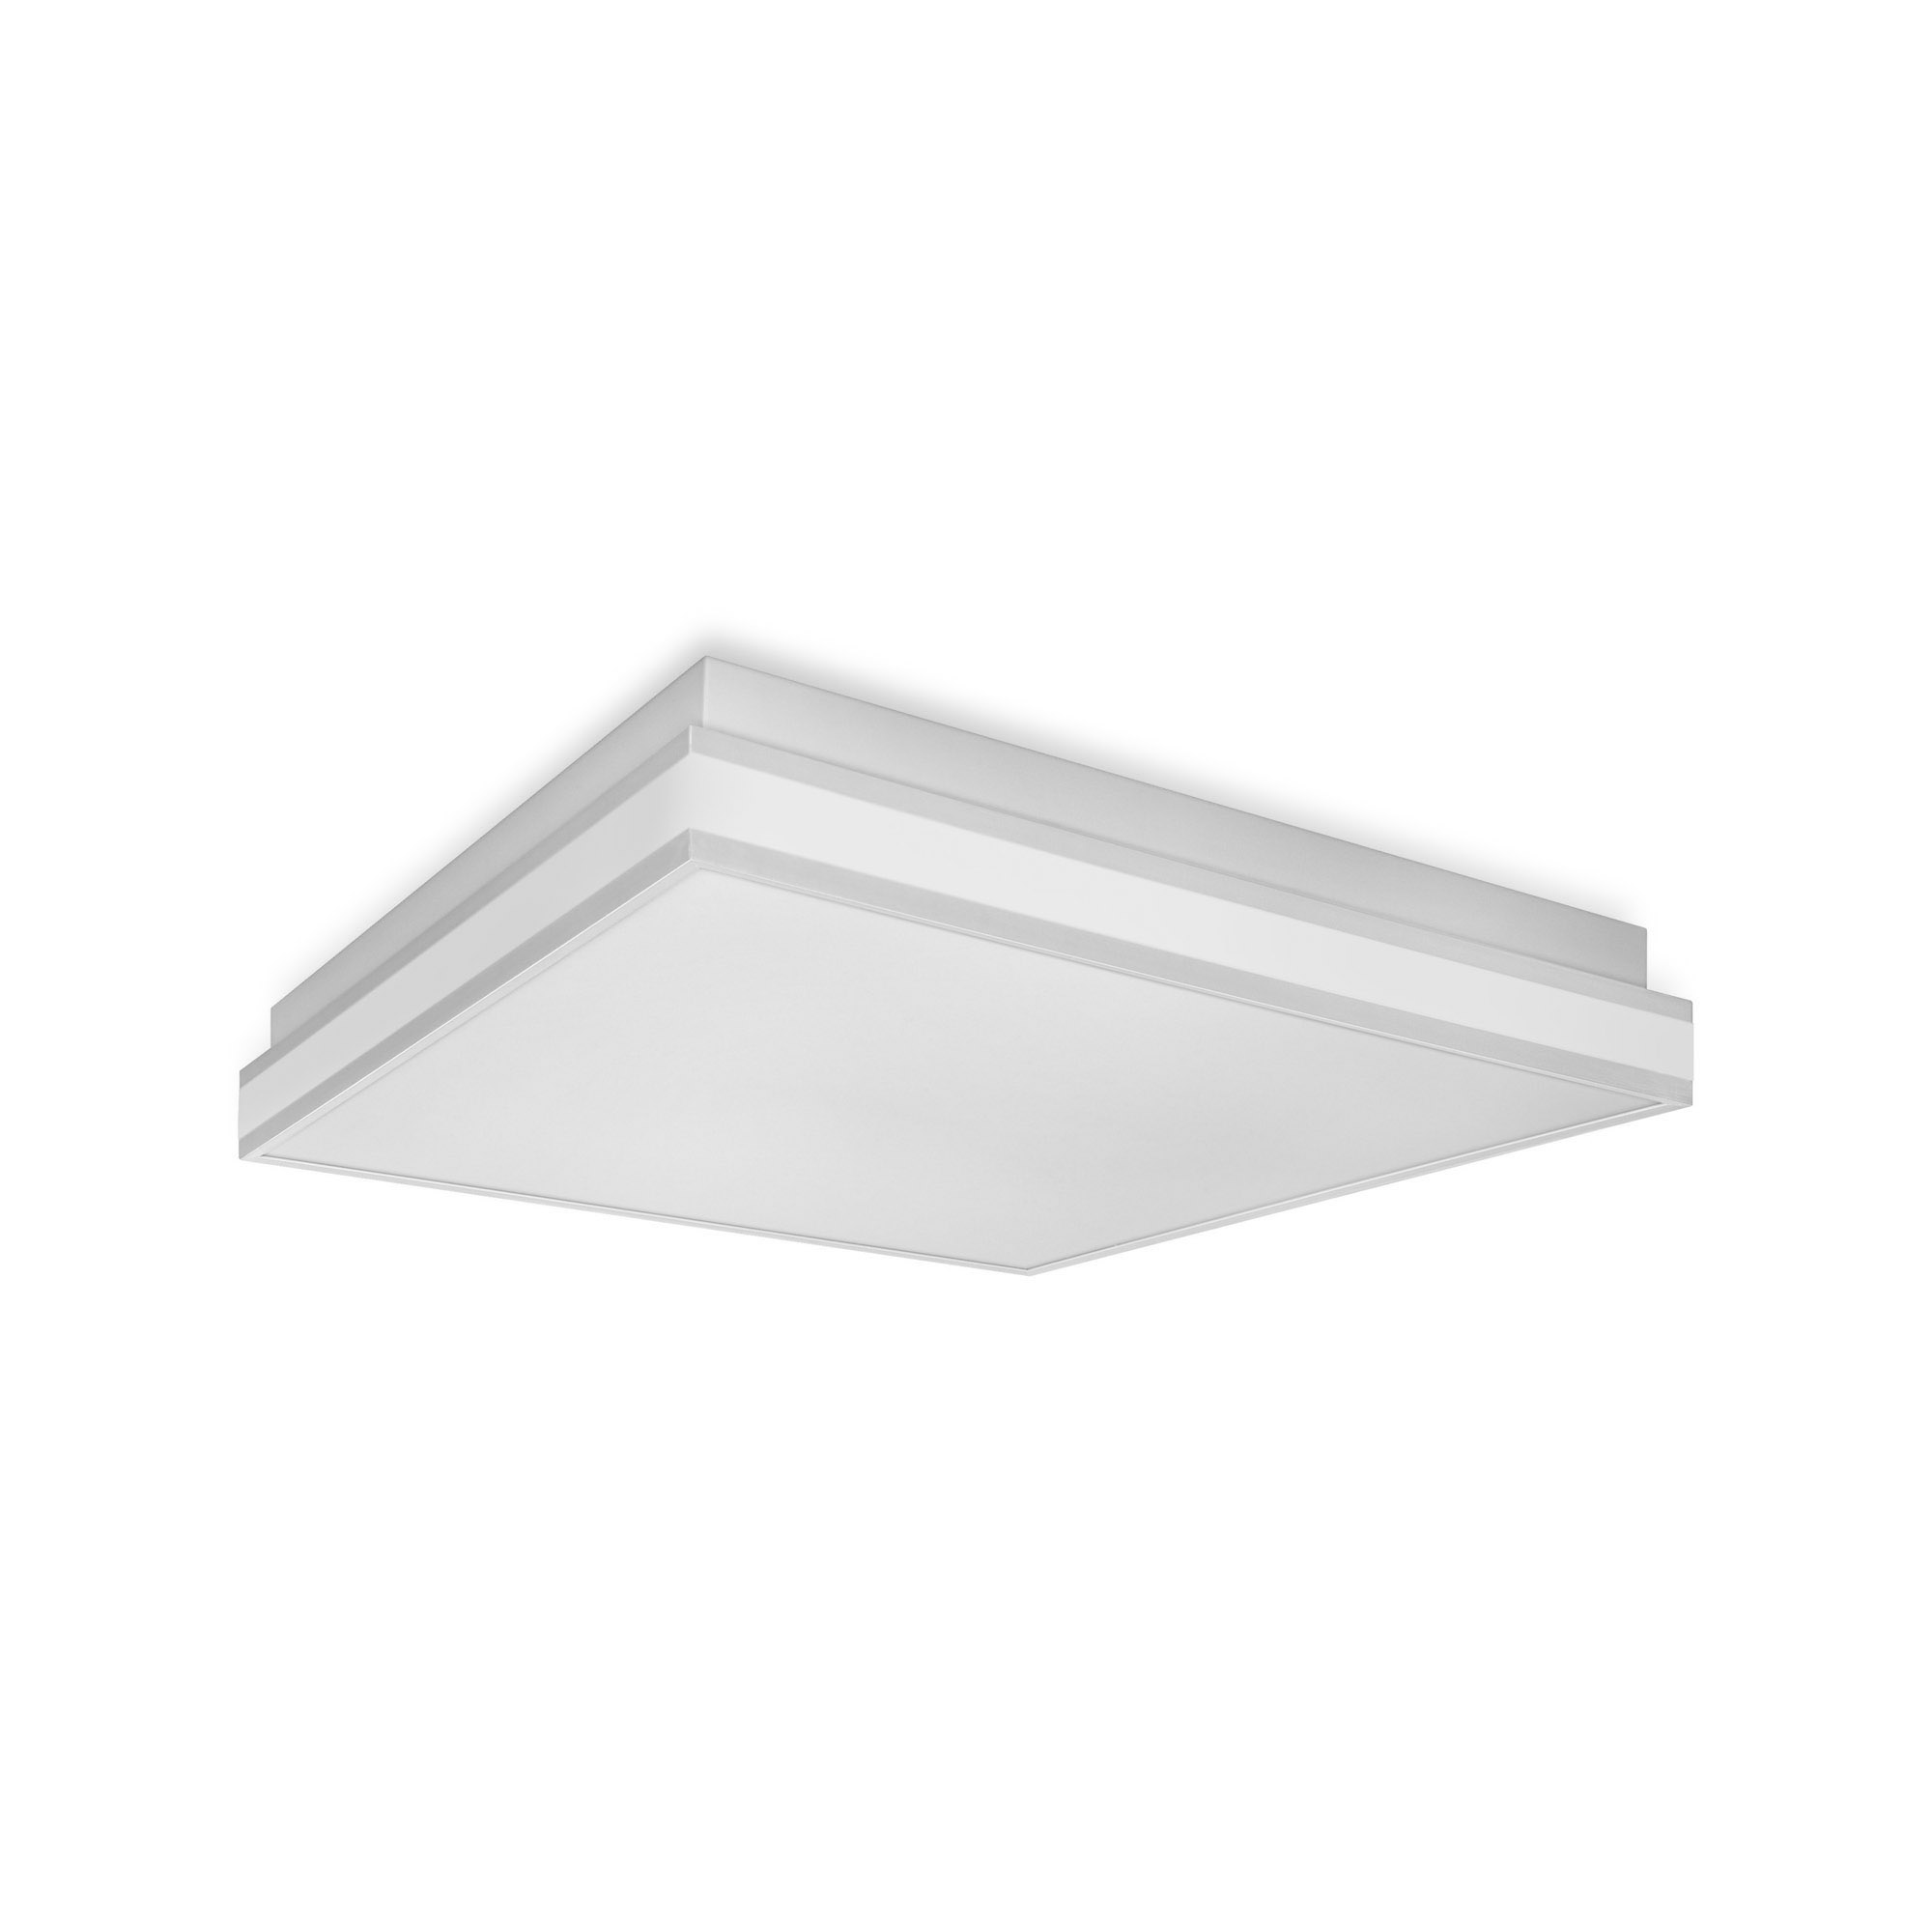 LEDVANCE SMART+ WiFi Tunable White LED Ceiling Light ORBIS MAGNET 450x450mm grey 4200lm